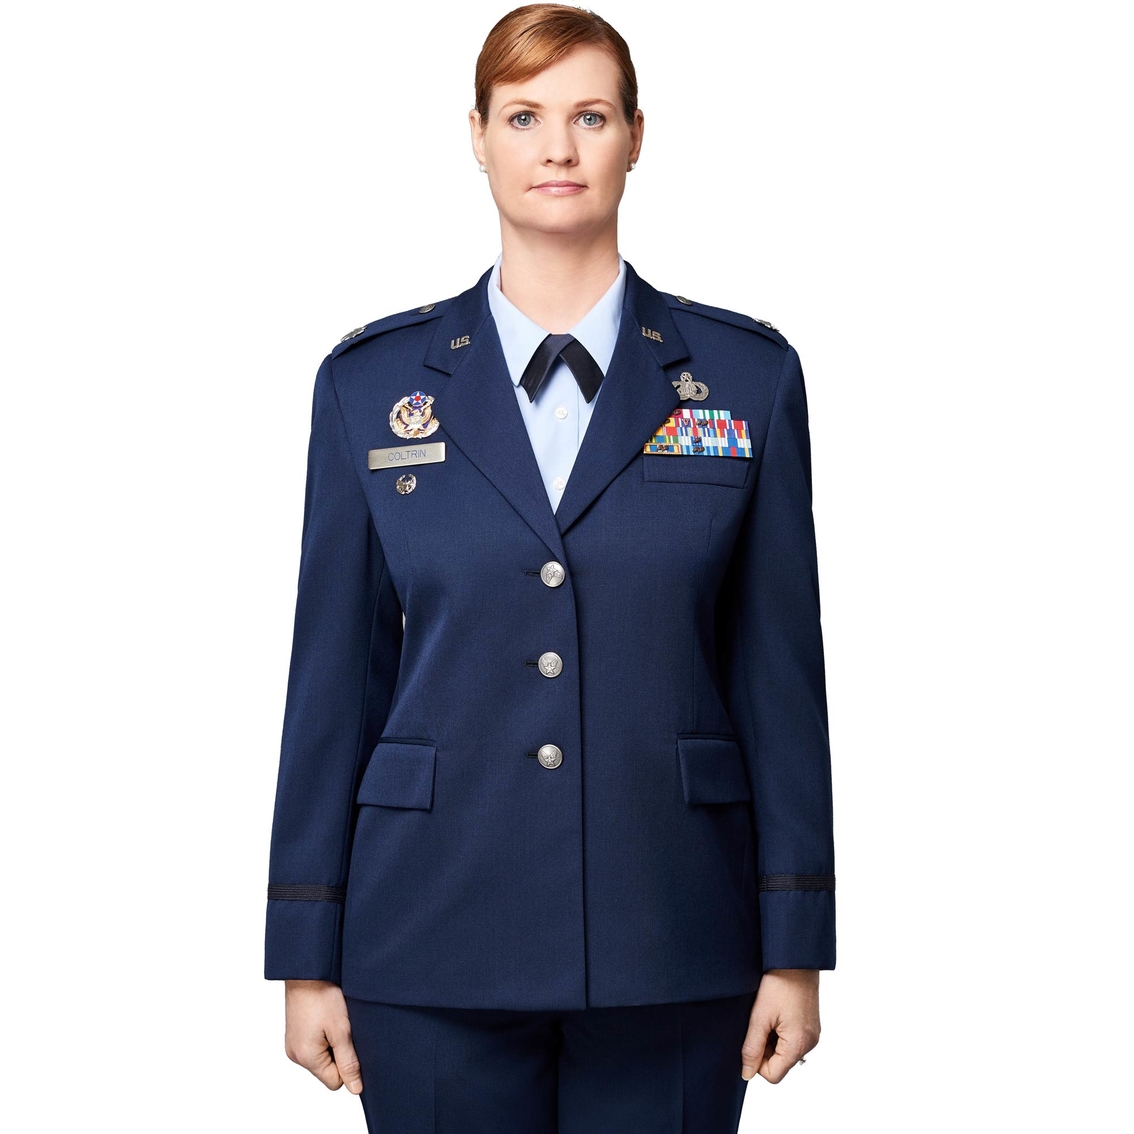 Brooks Brothers Air Force Uniform 